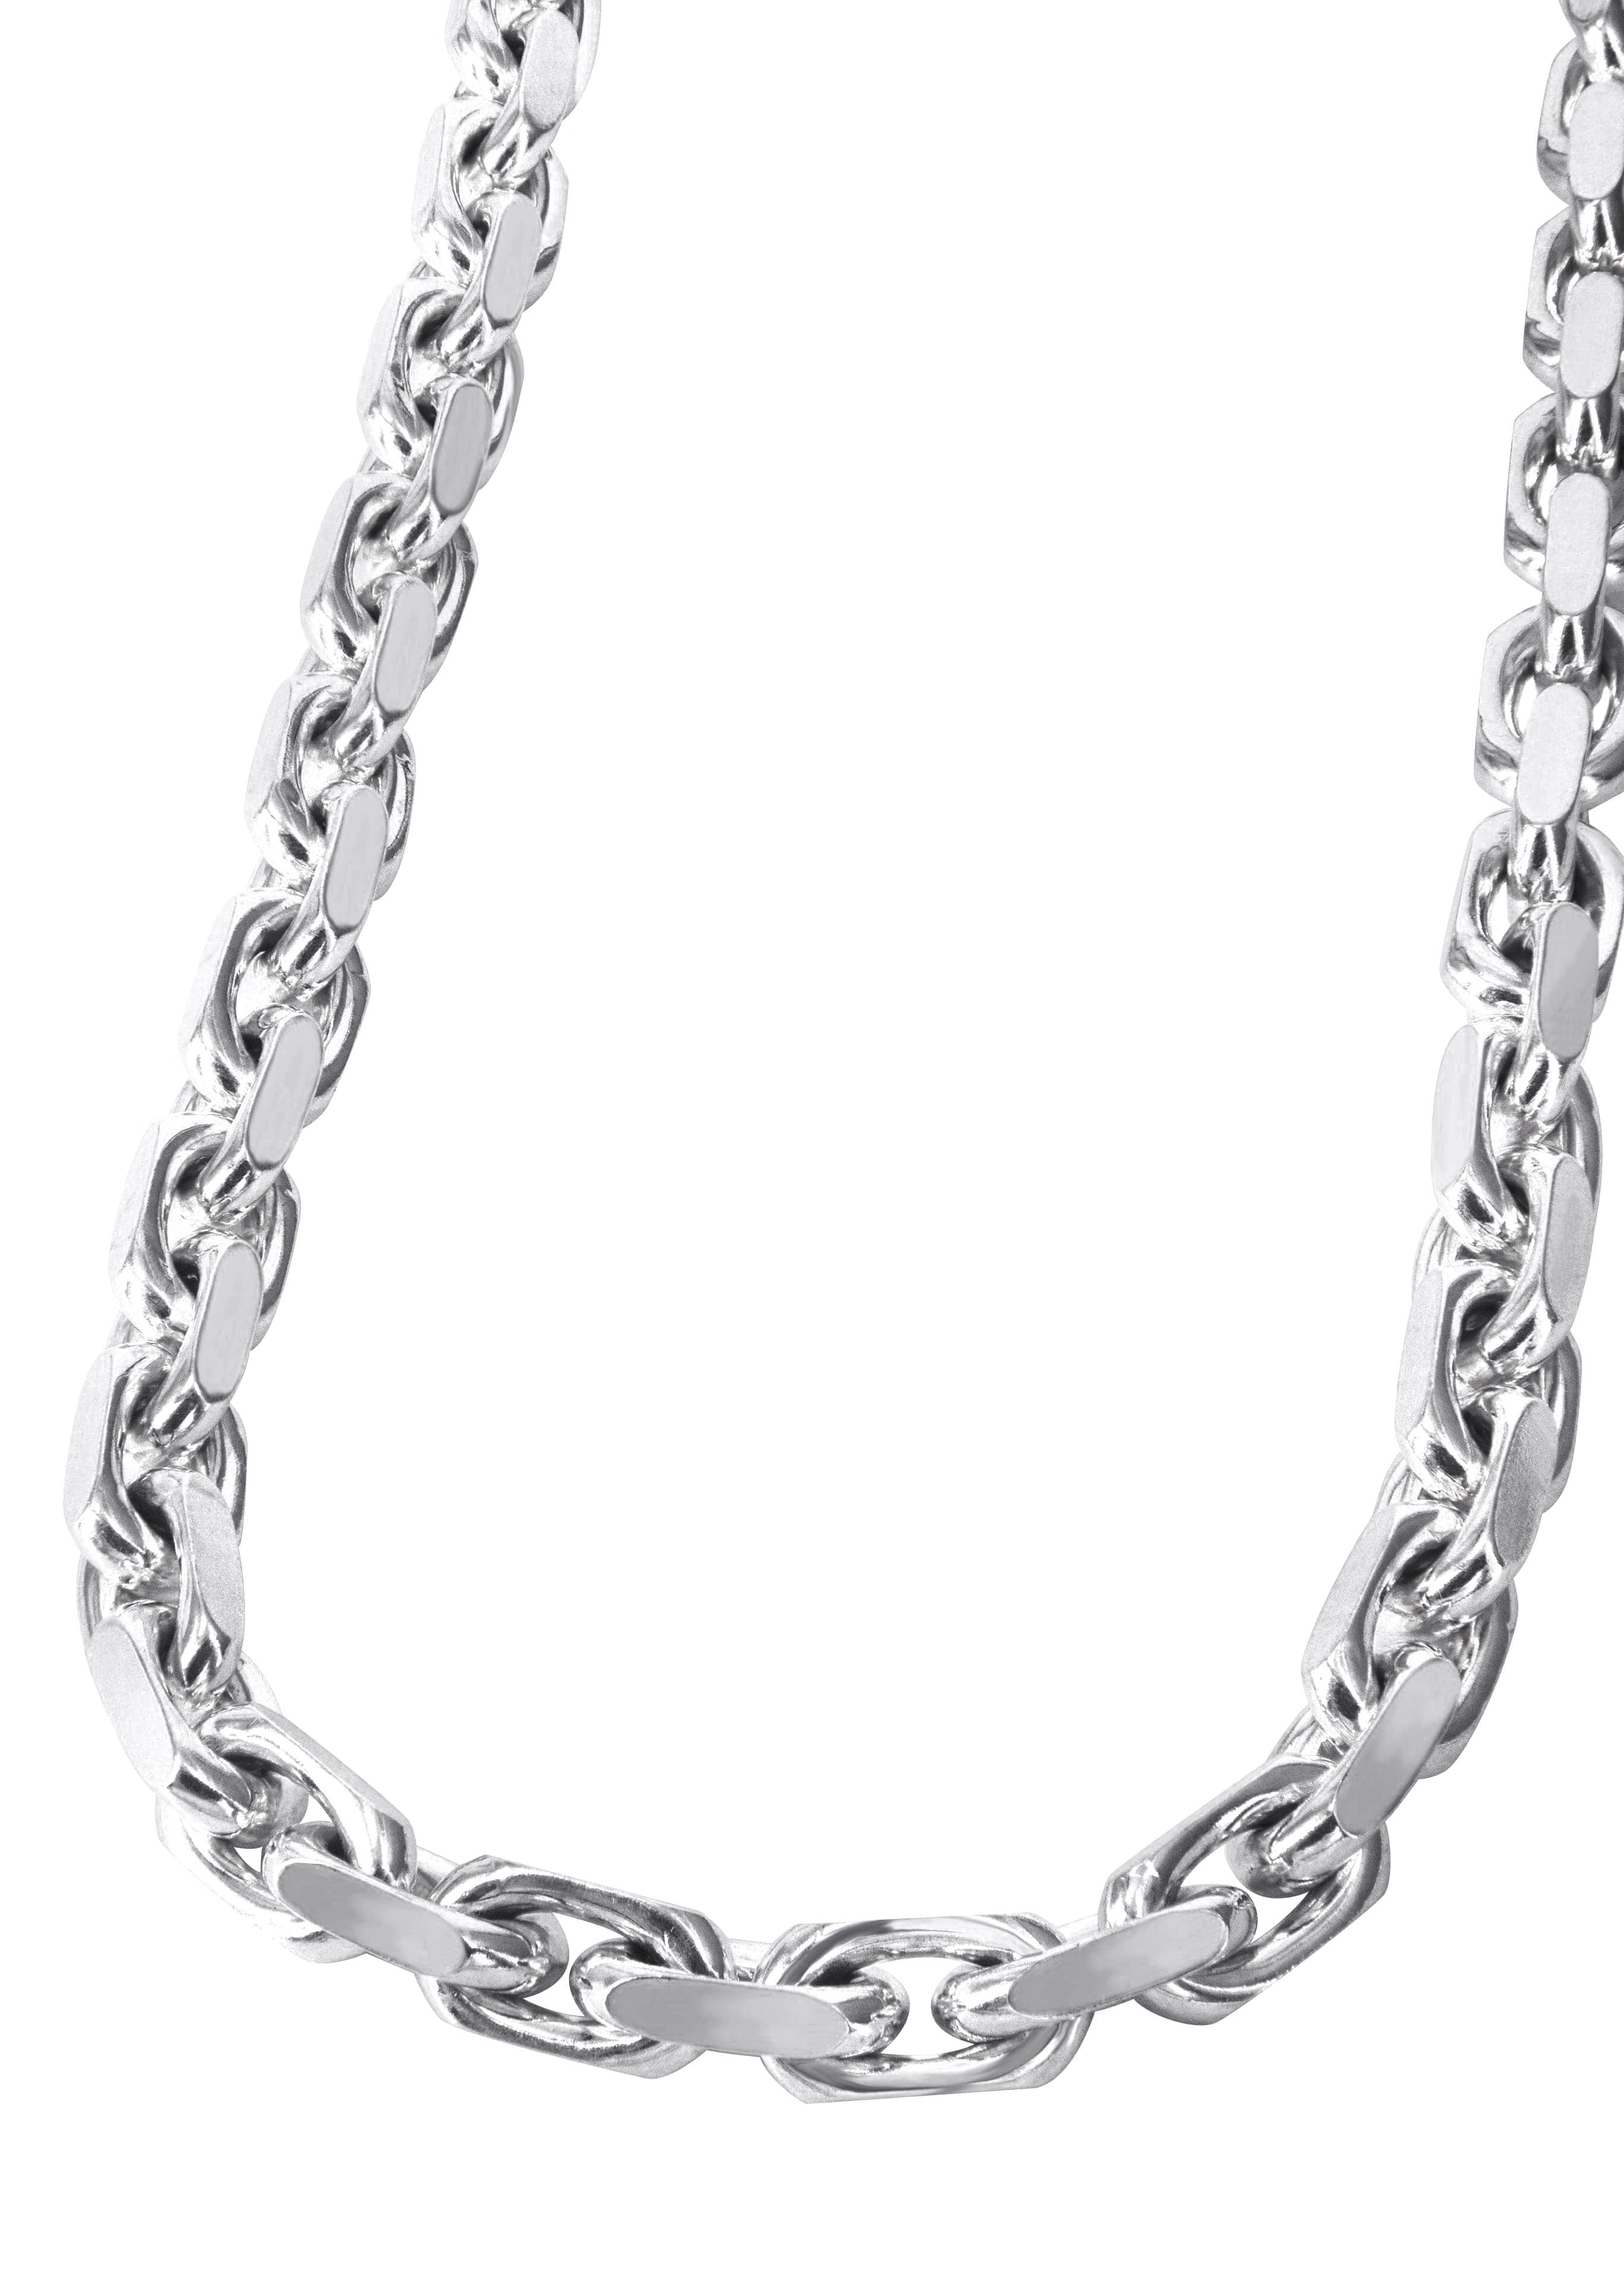 925 Sterling Silver 7.5mm Triangle Rolo Hermes Link Chain Necklace Or  Bracelet | eBay